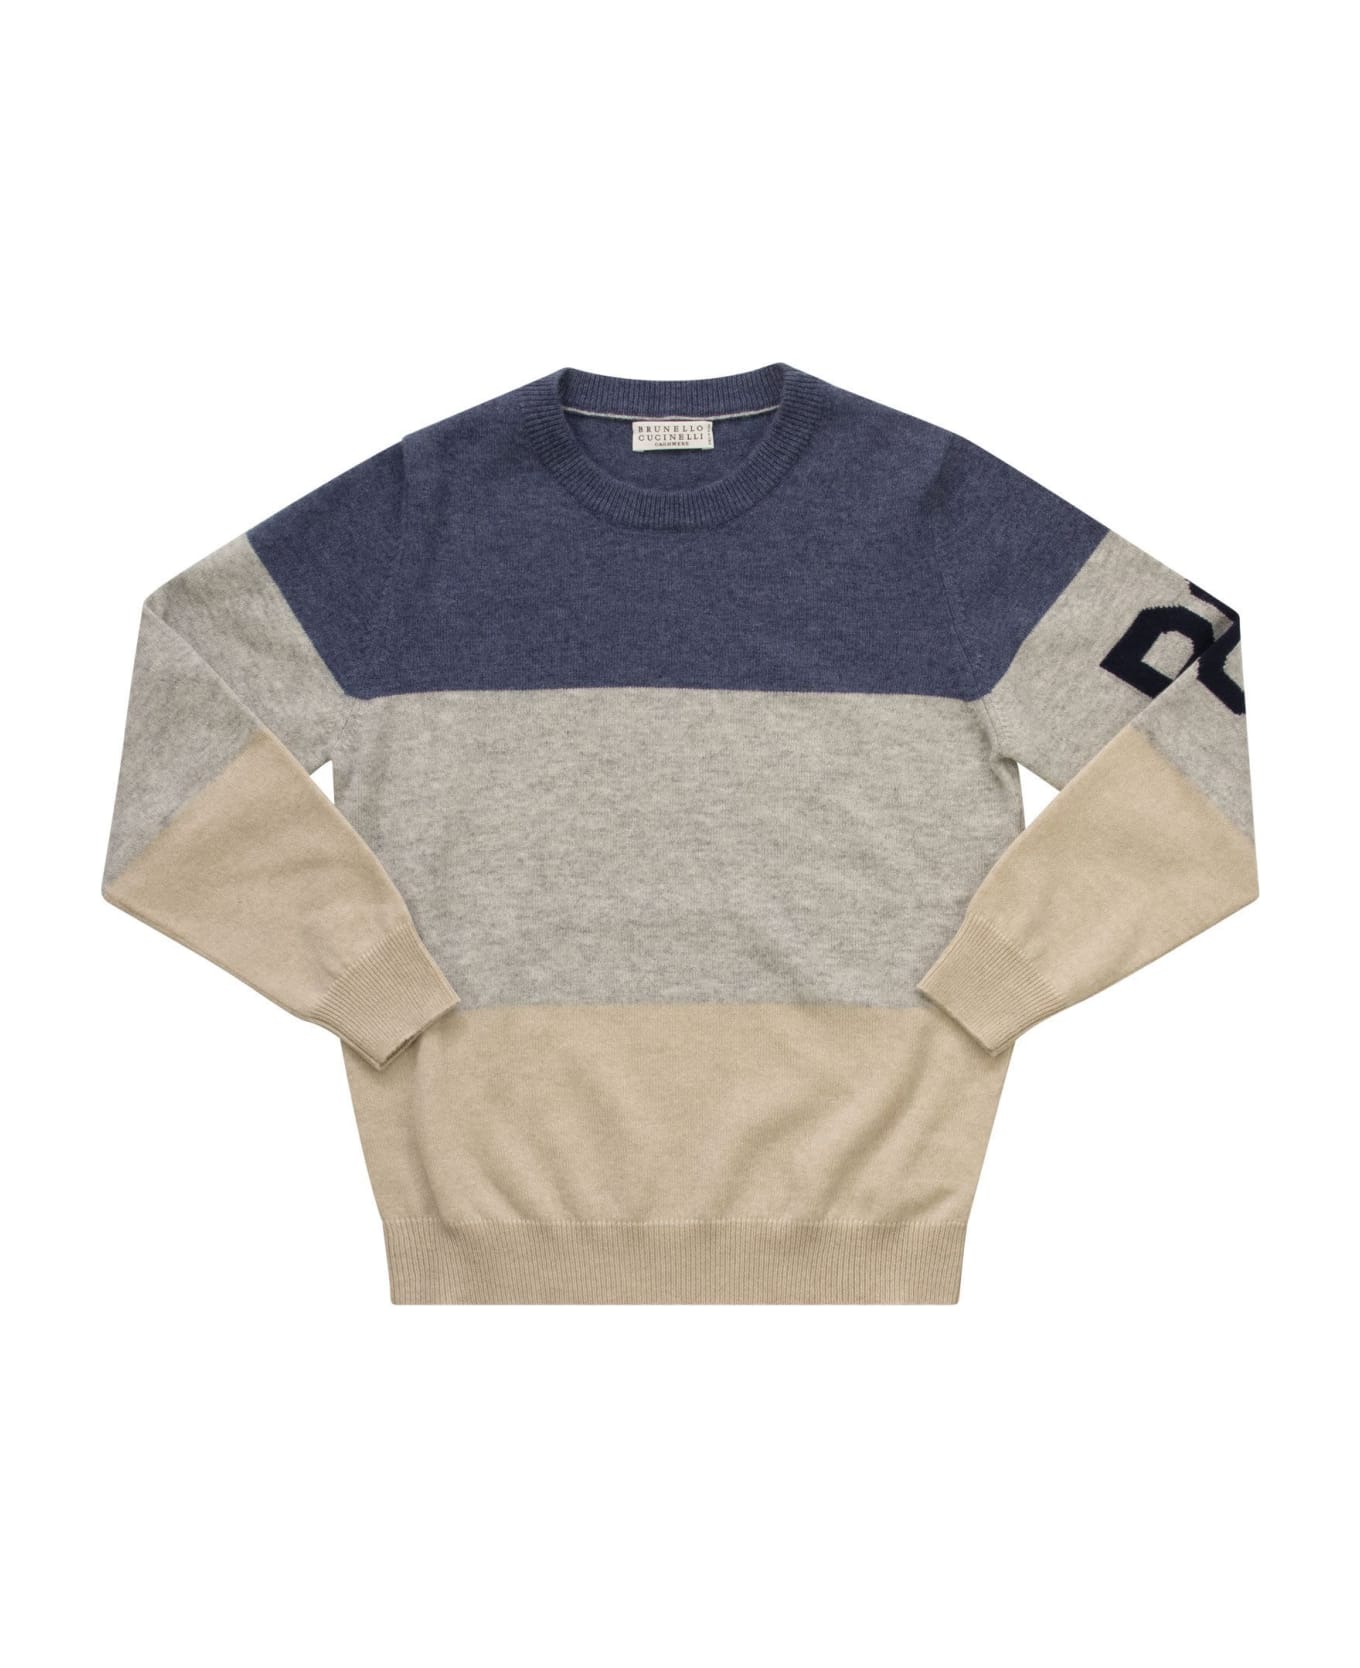 Brunello Cucinelli Cashmere Crew-neck Sweater - Blue/grey/sand